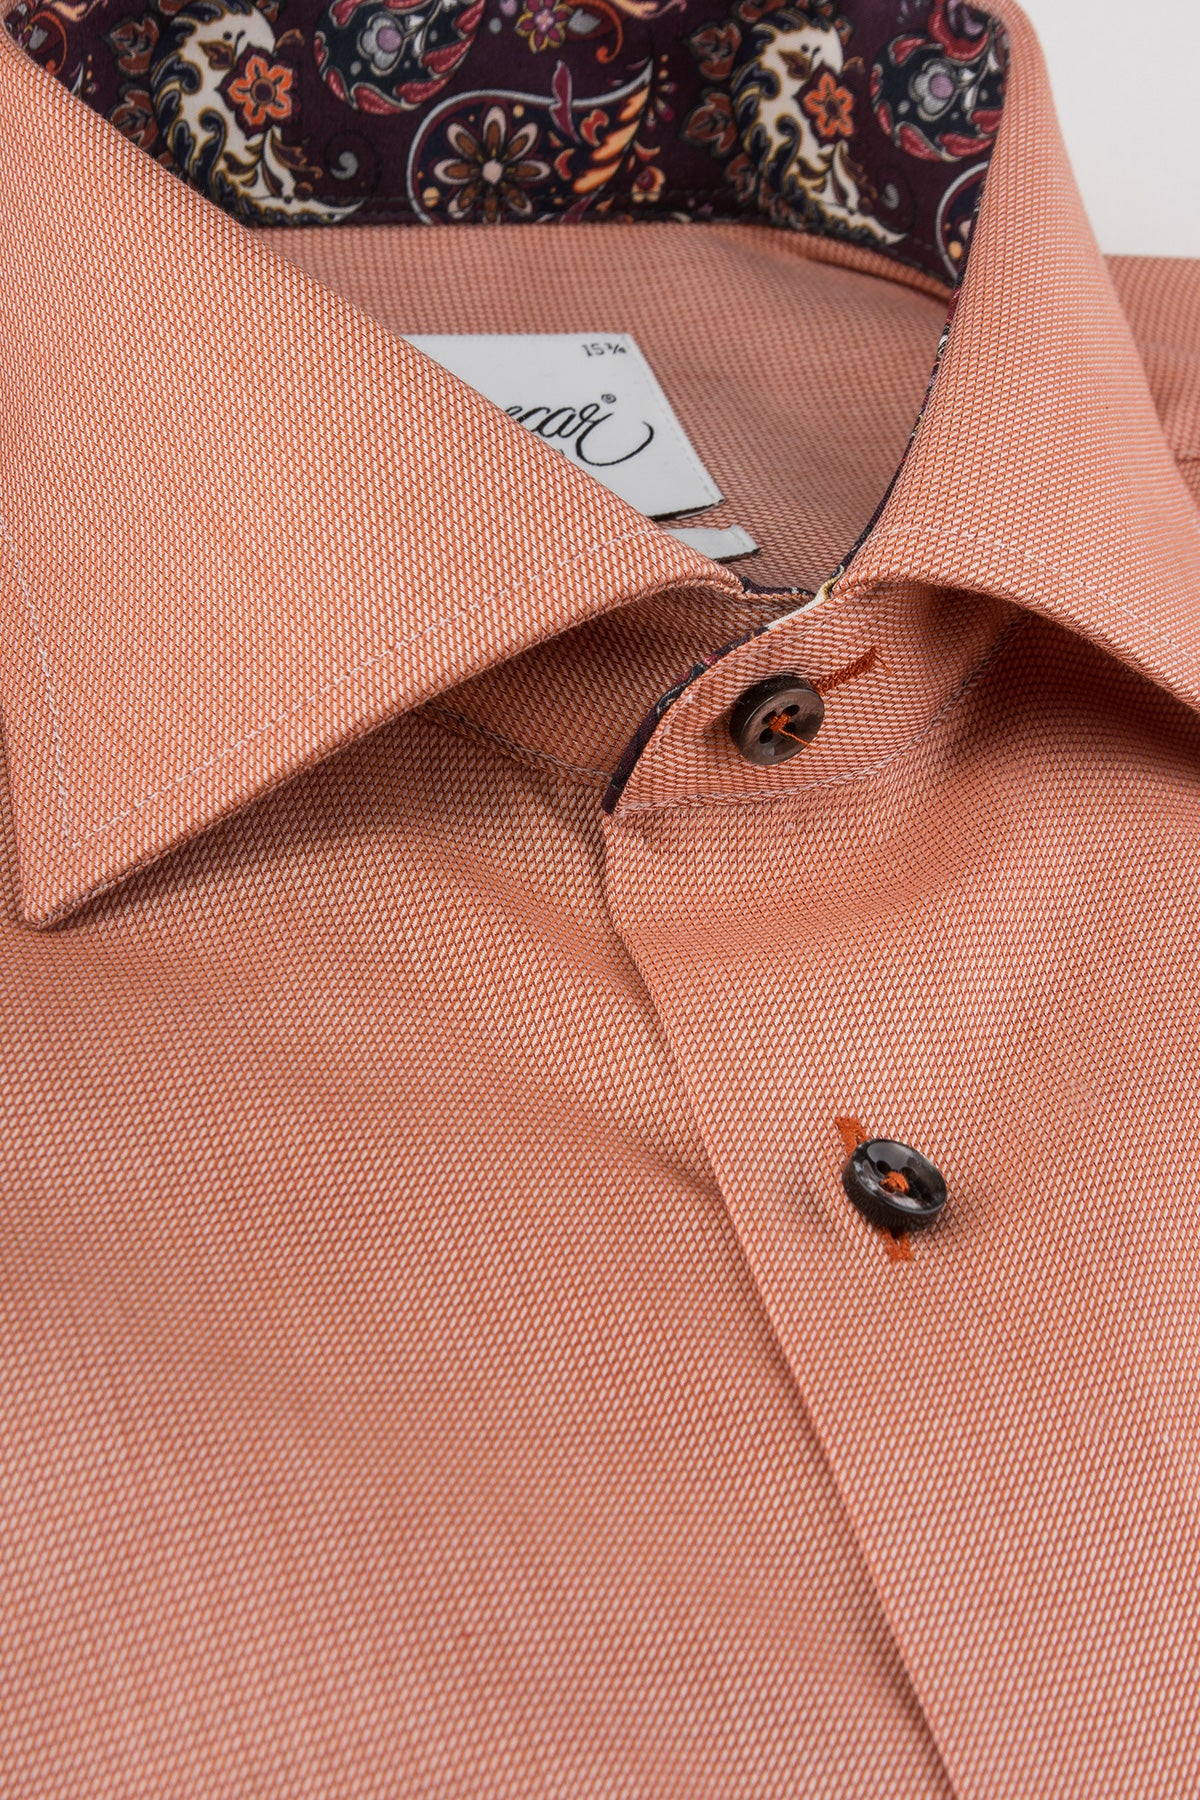 Orange slim fit shirt with contrast details